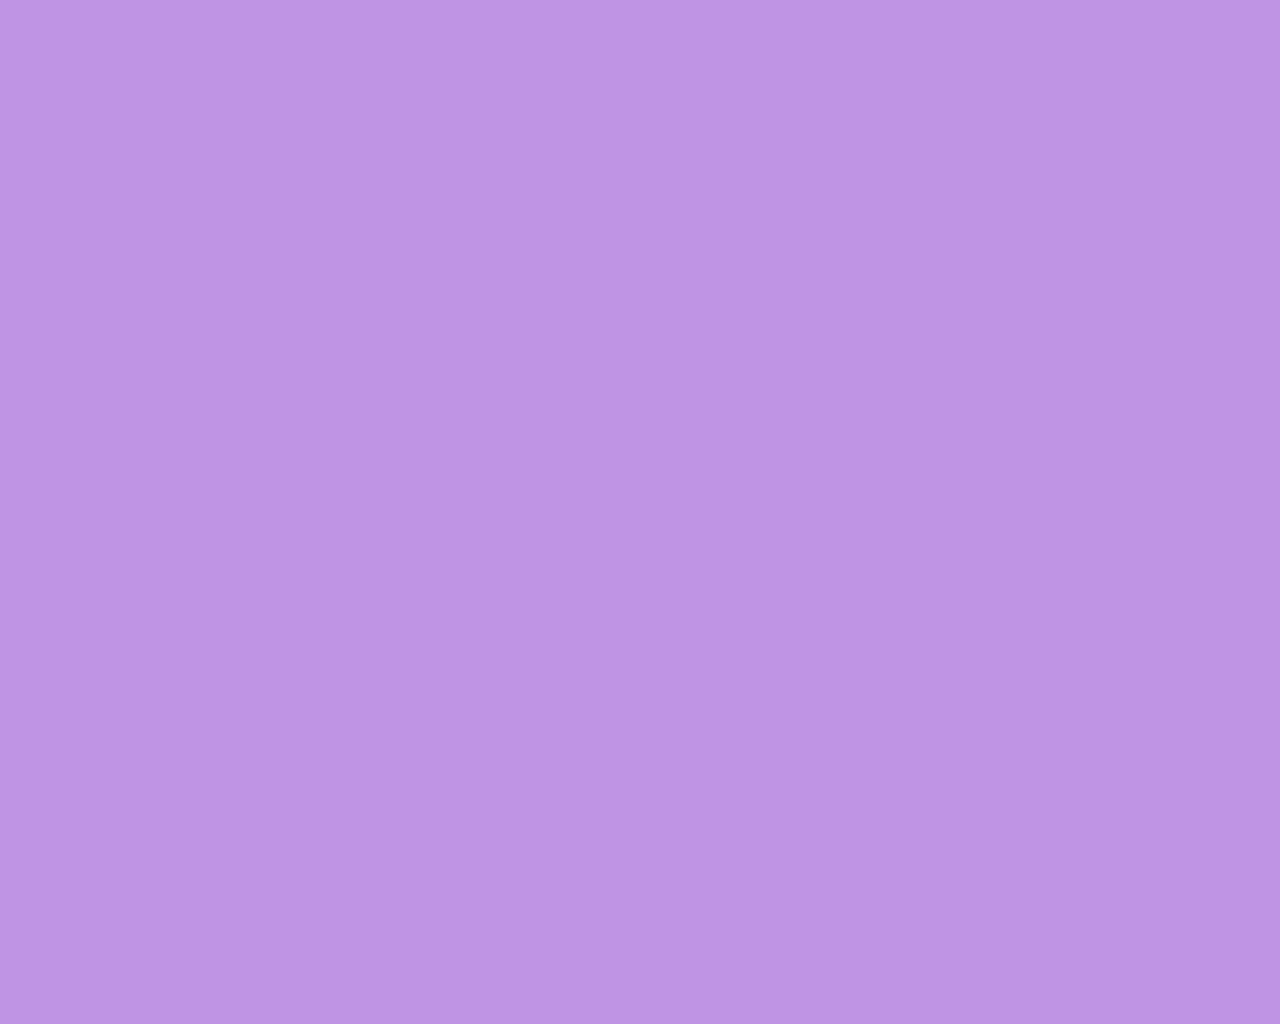 Solid Lavender Color Wallpaper Solid bright purplelight